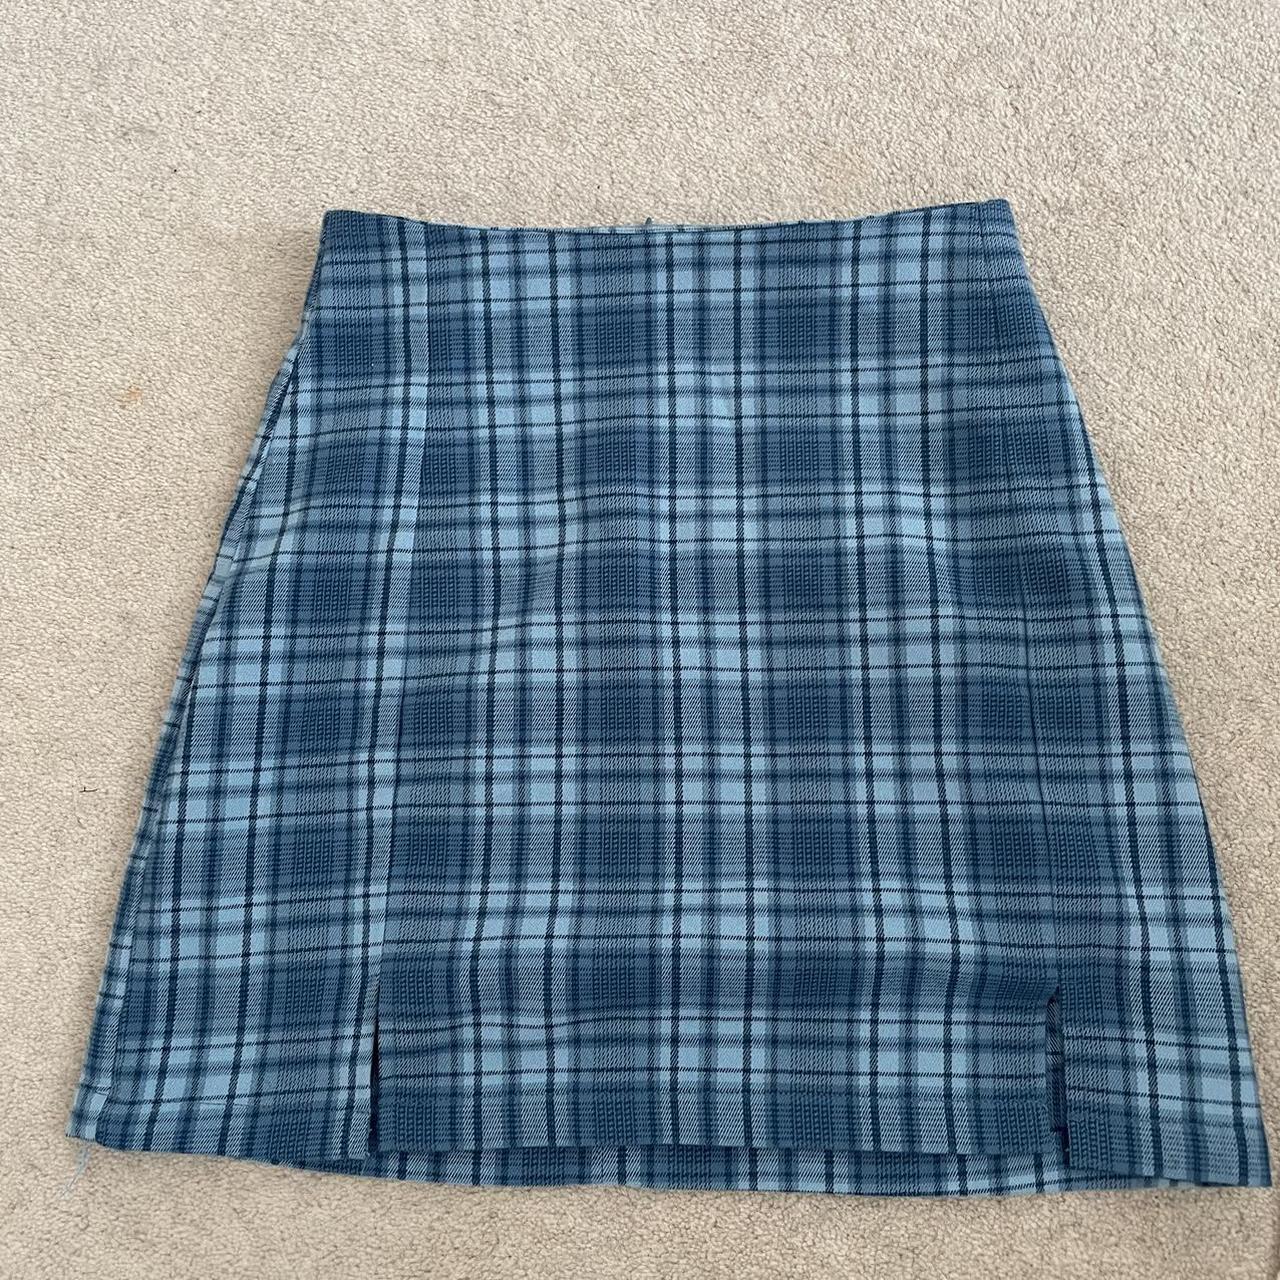 Brandy Melville blue chequered mini skirt One... - Depop